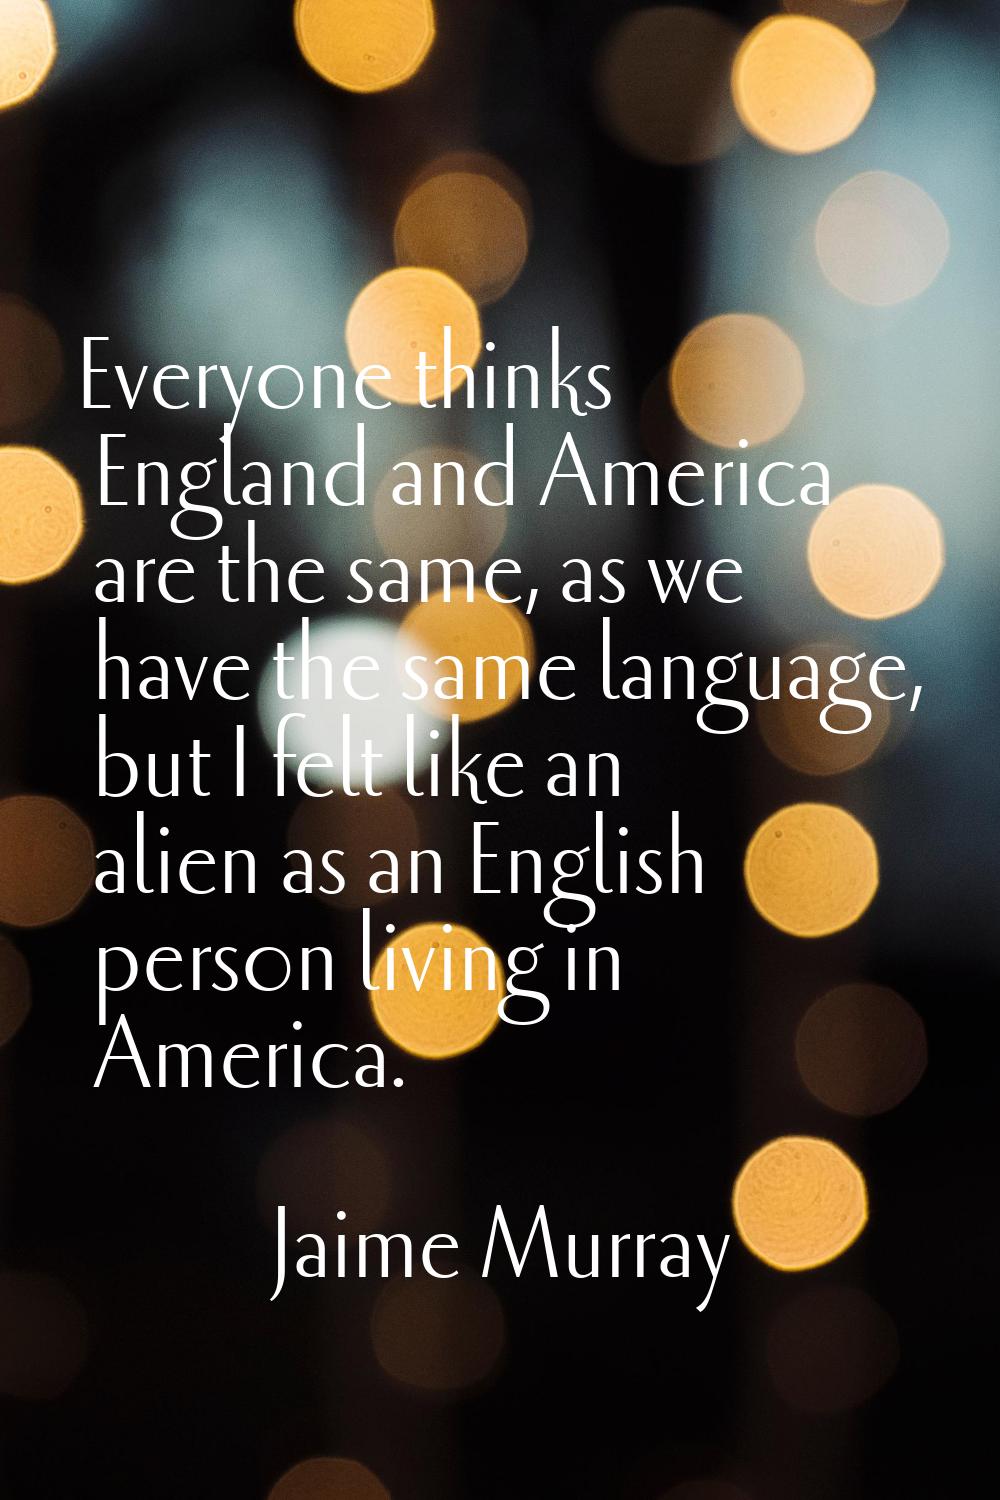 Everyone thinks England and America are the same, as we have the same language, but I felt like an 